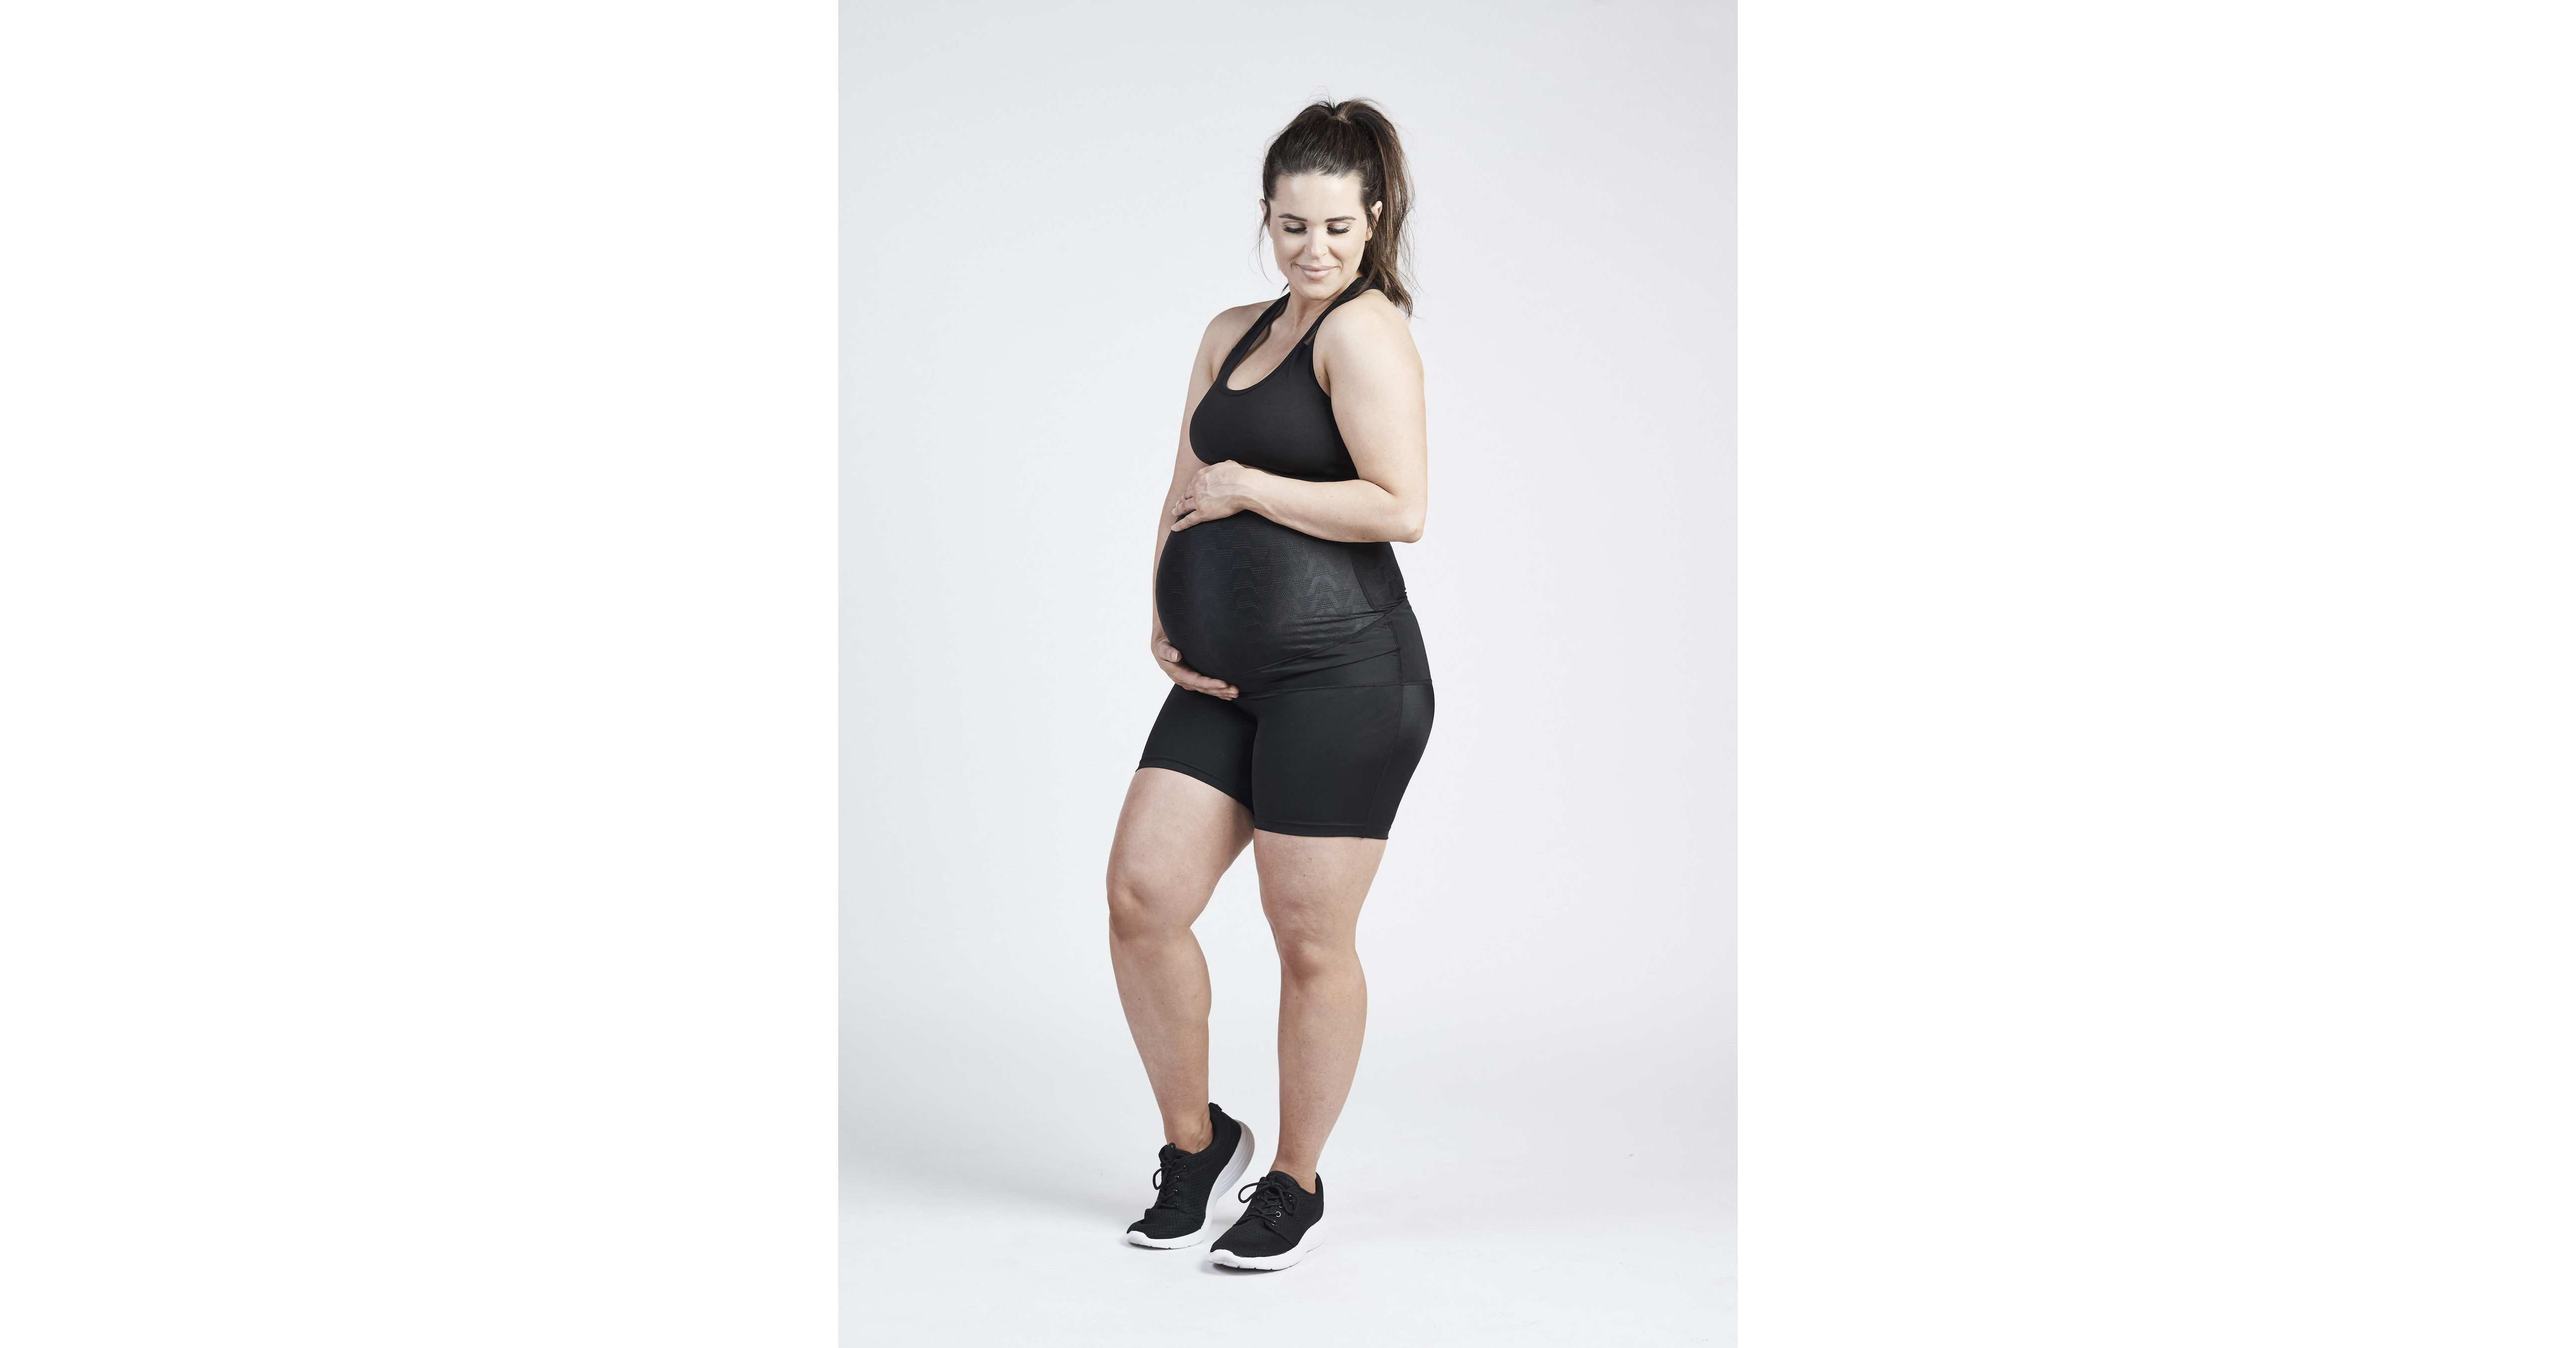 All Sizes NEW SRC PREGNANCY MINI SHORTS BLACK for Pregnancy Support